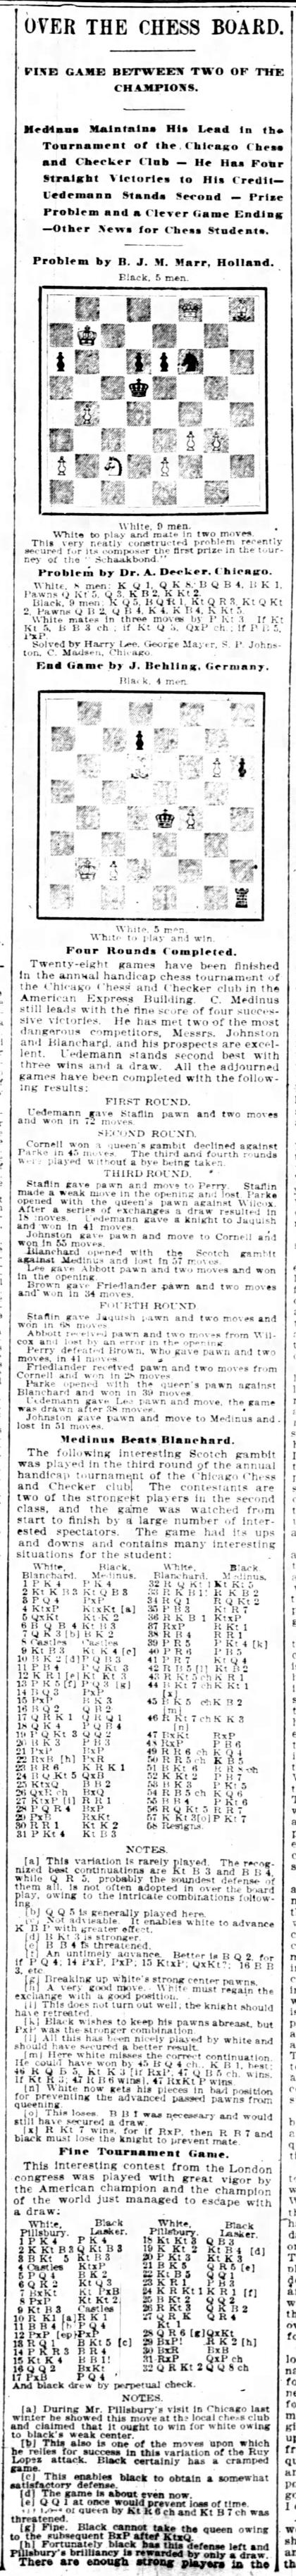 1899.11.12-01 Chicago Tribune.jpg